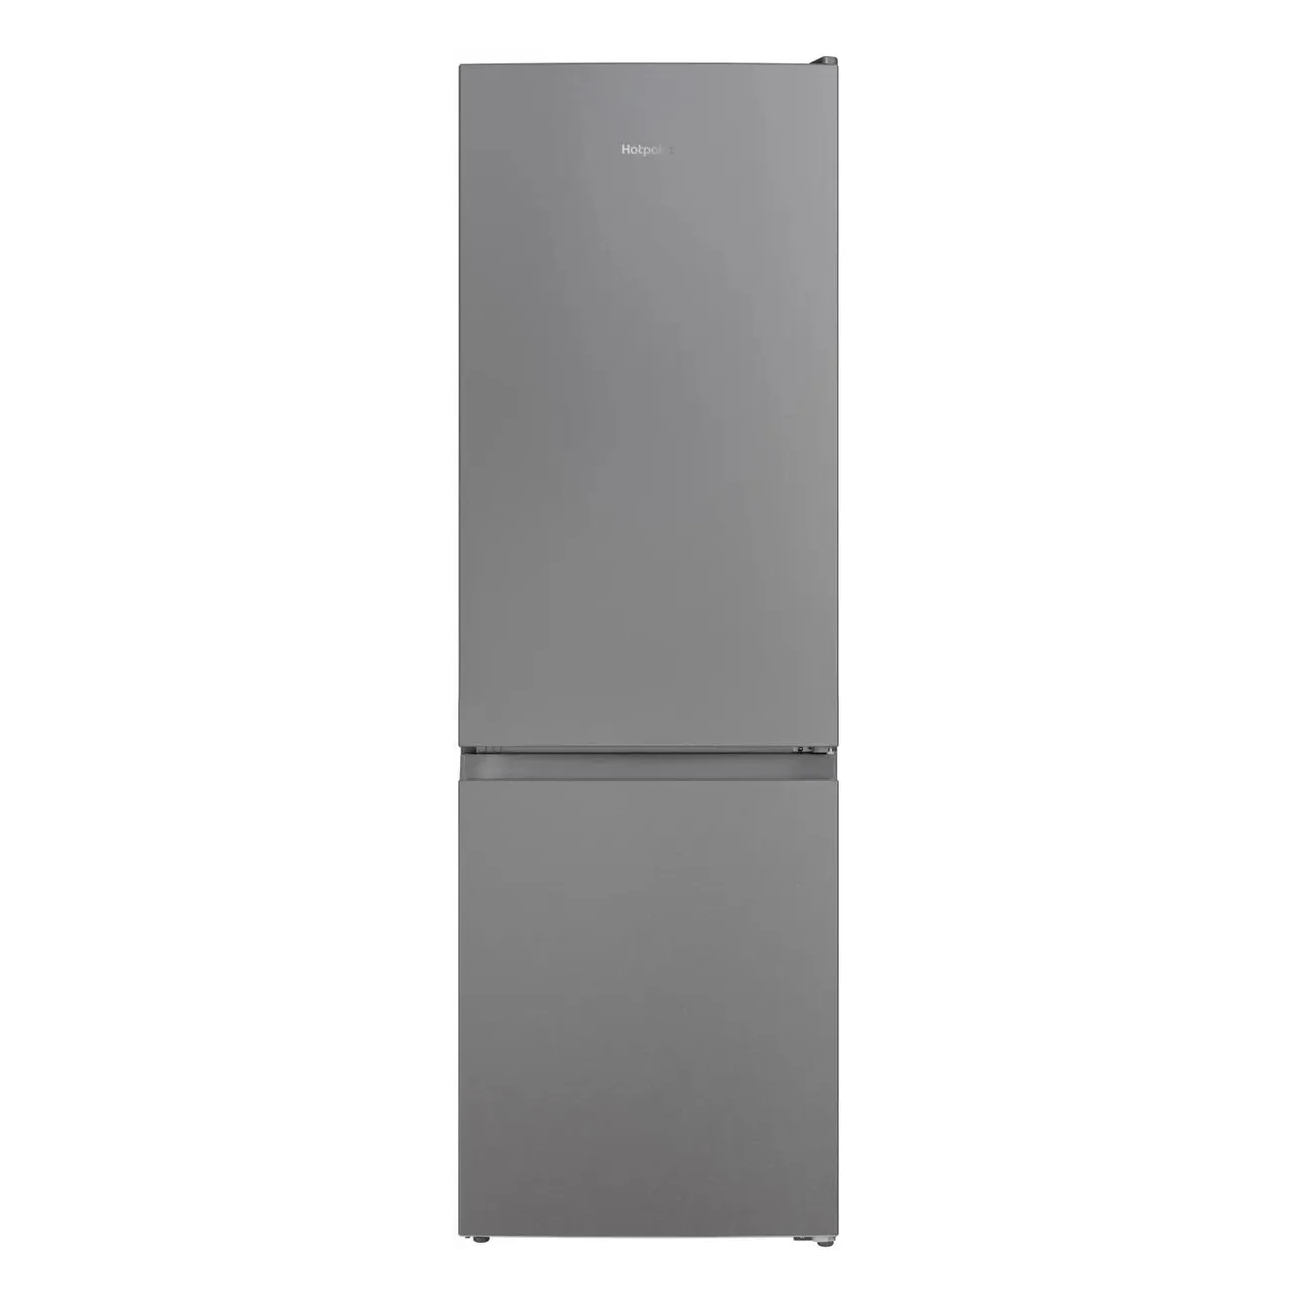 Холодильник HotPoint HT 4180 S серебристый двухкамерный холодильник hotpoint hts 4180 s серебристый